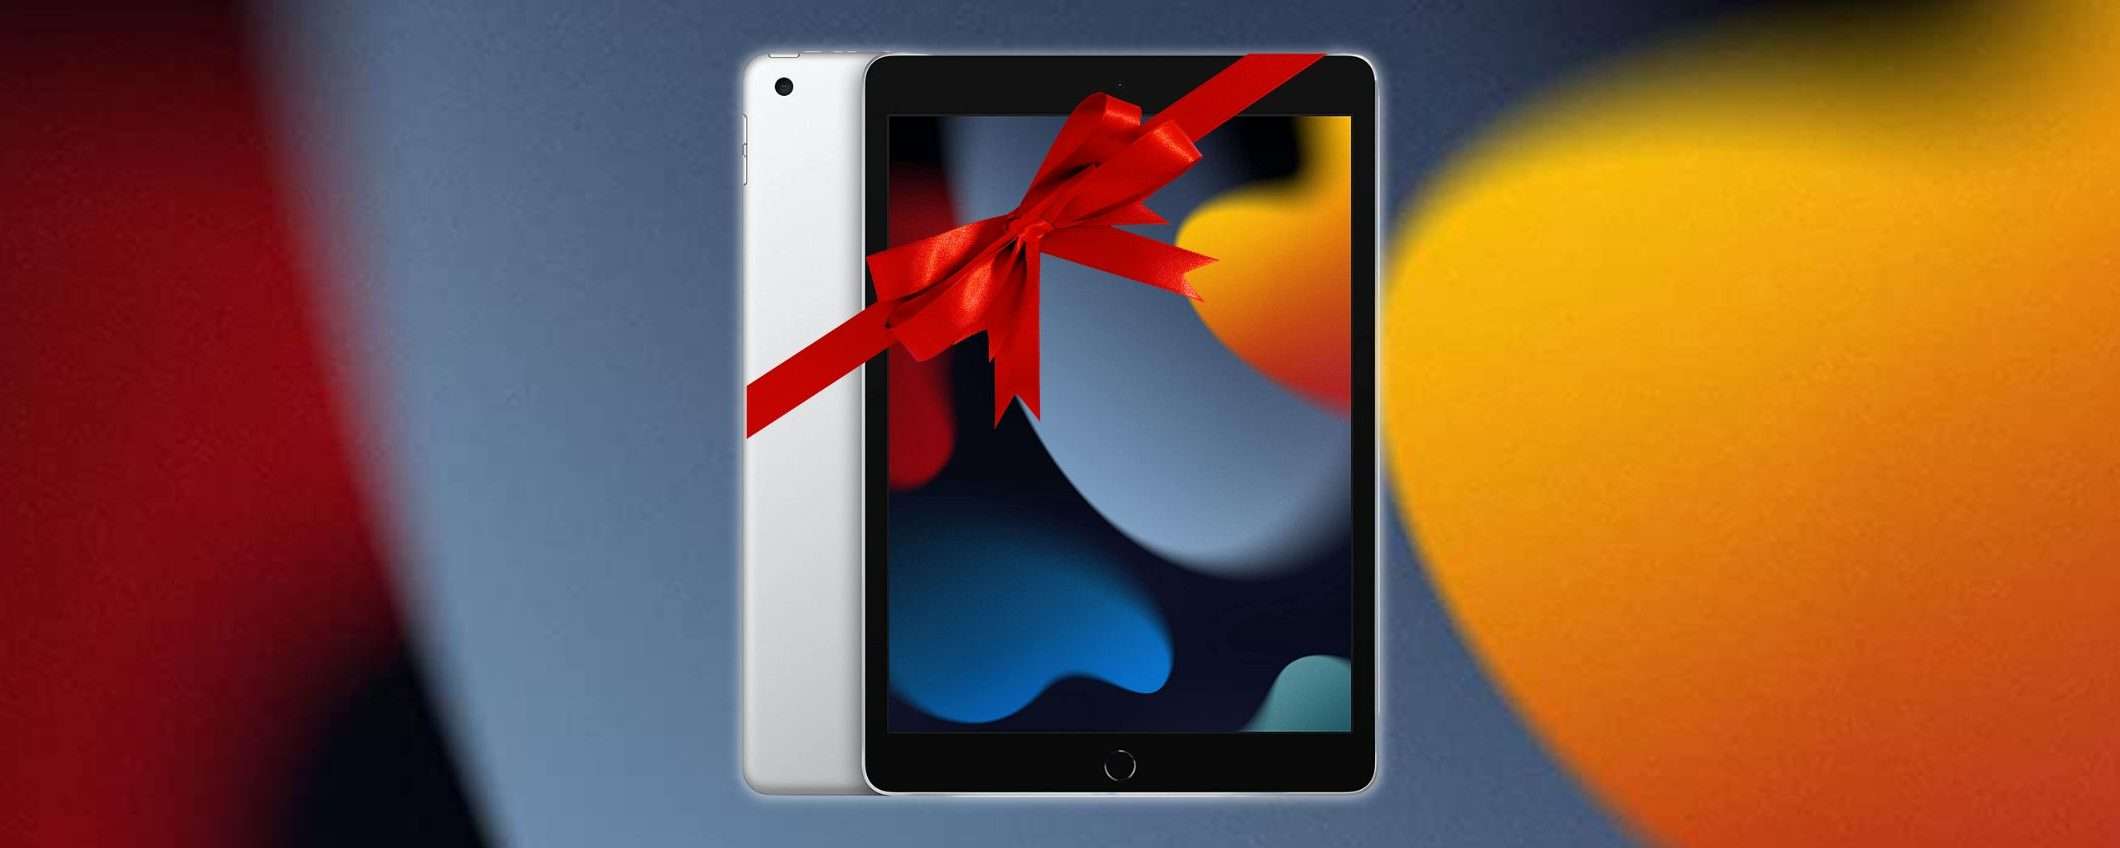 iPad in regalo per Natale: l'offerta Amazon è irrinunciabile